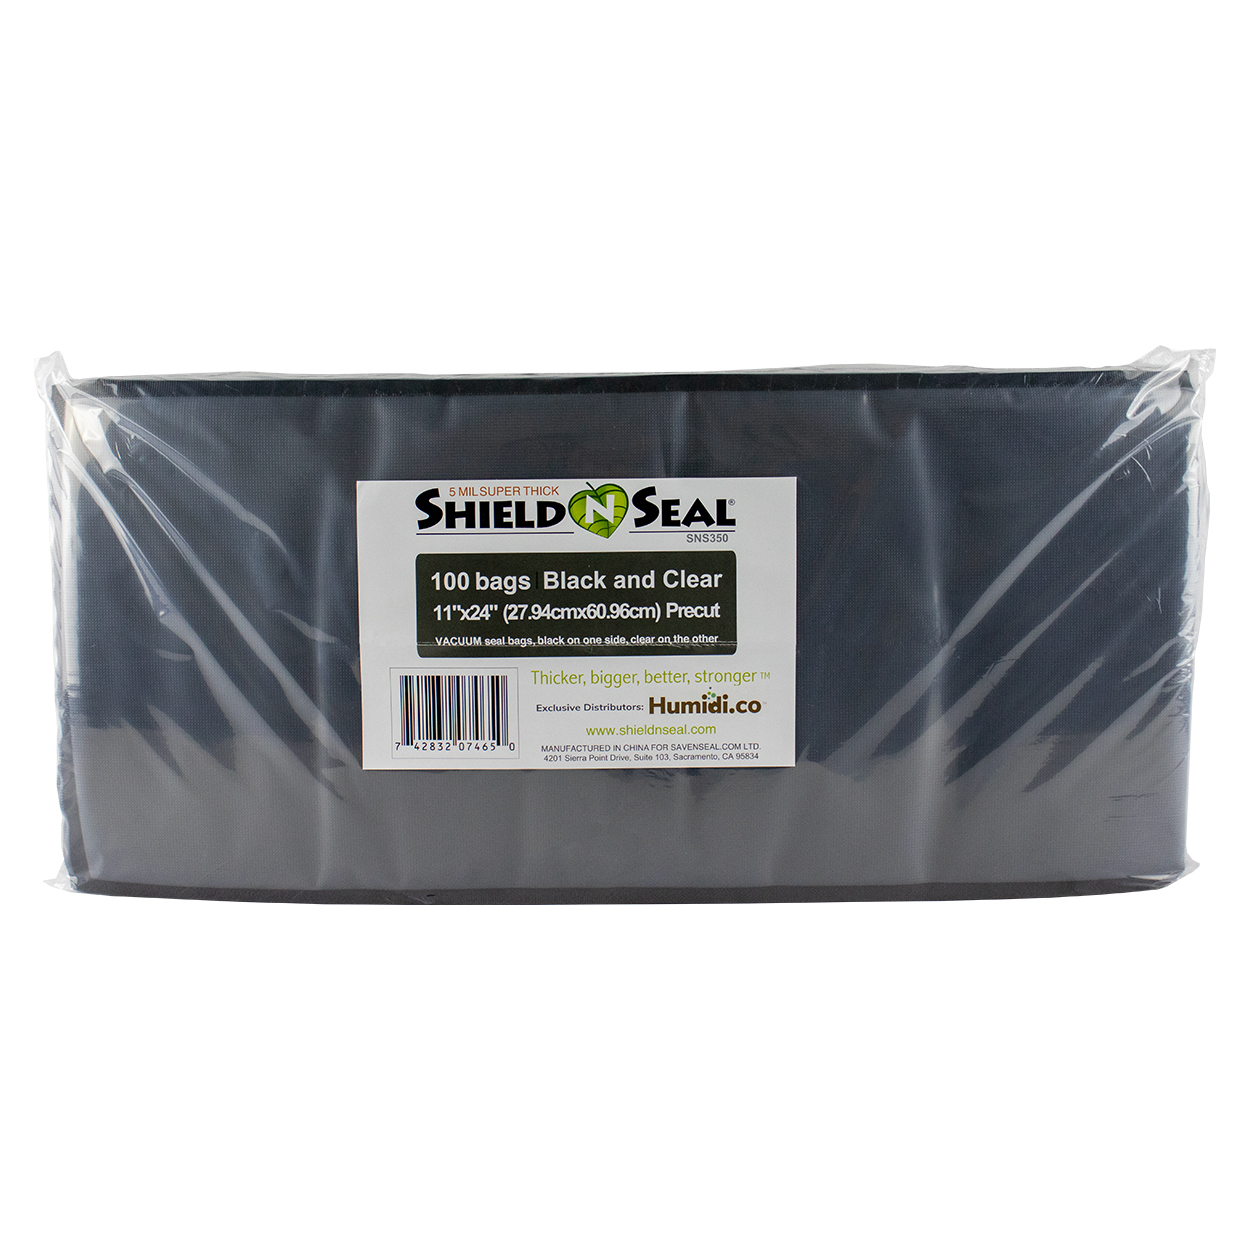 Shield N Seal 11 inch Commercial Grade Vacuum Sealer SNS 605